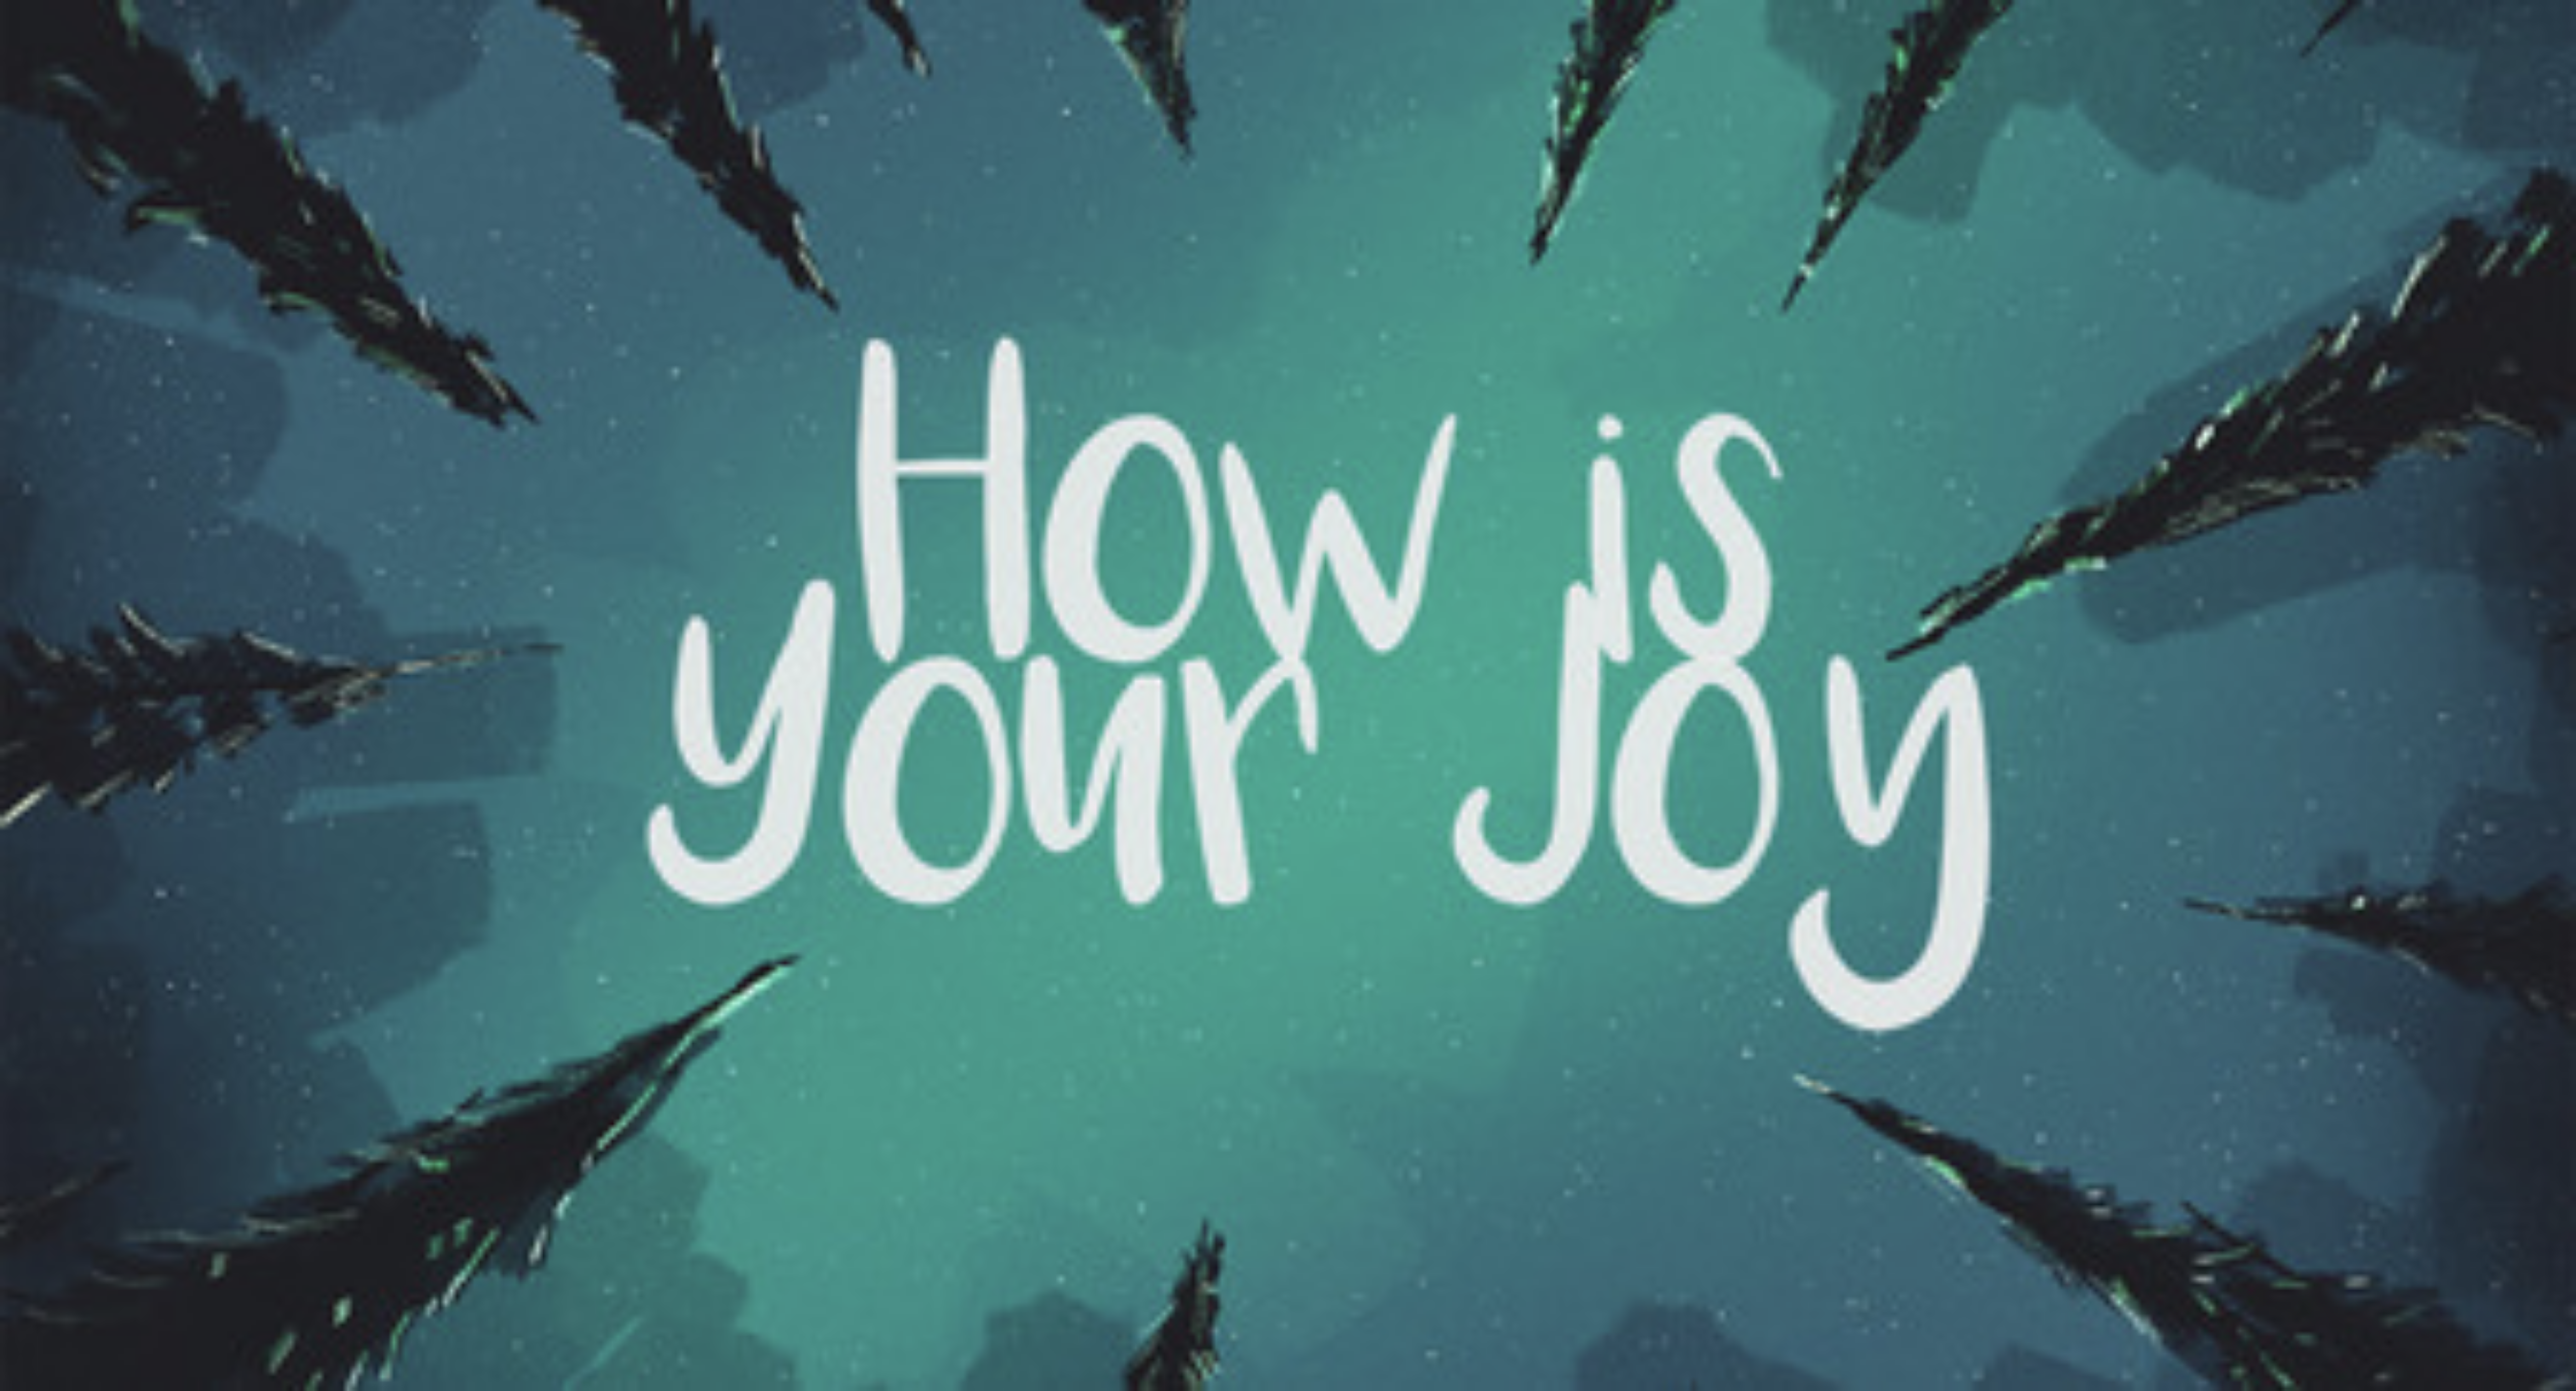 How is Your Joy?